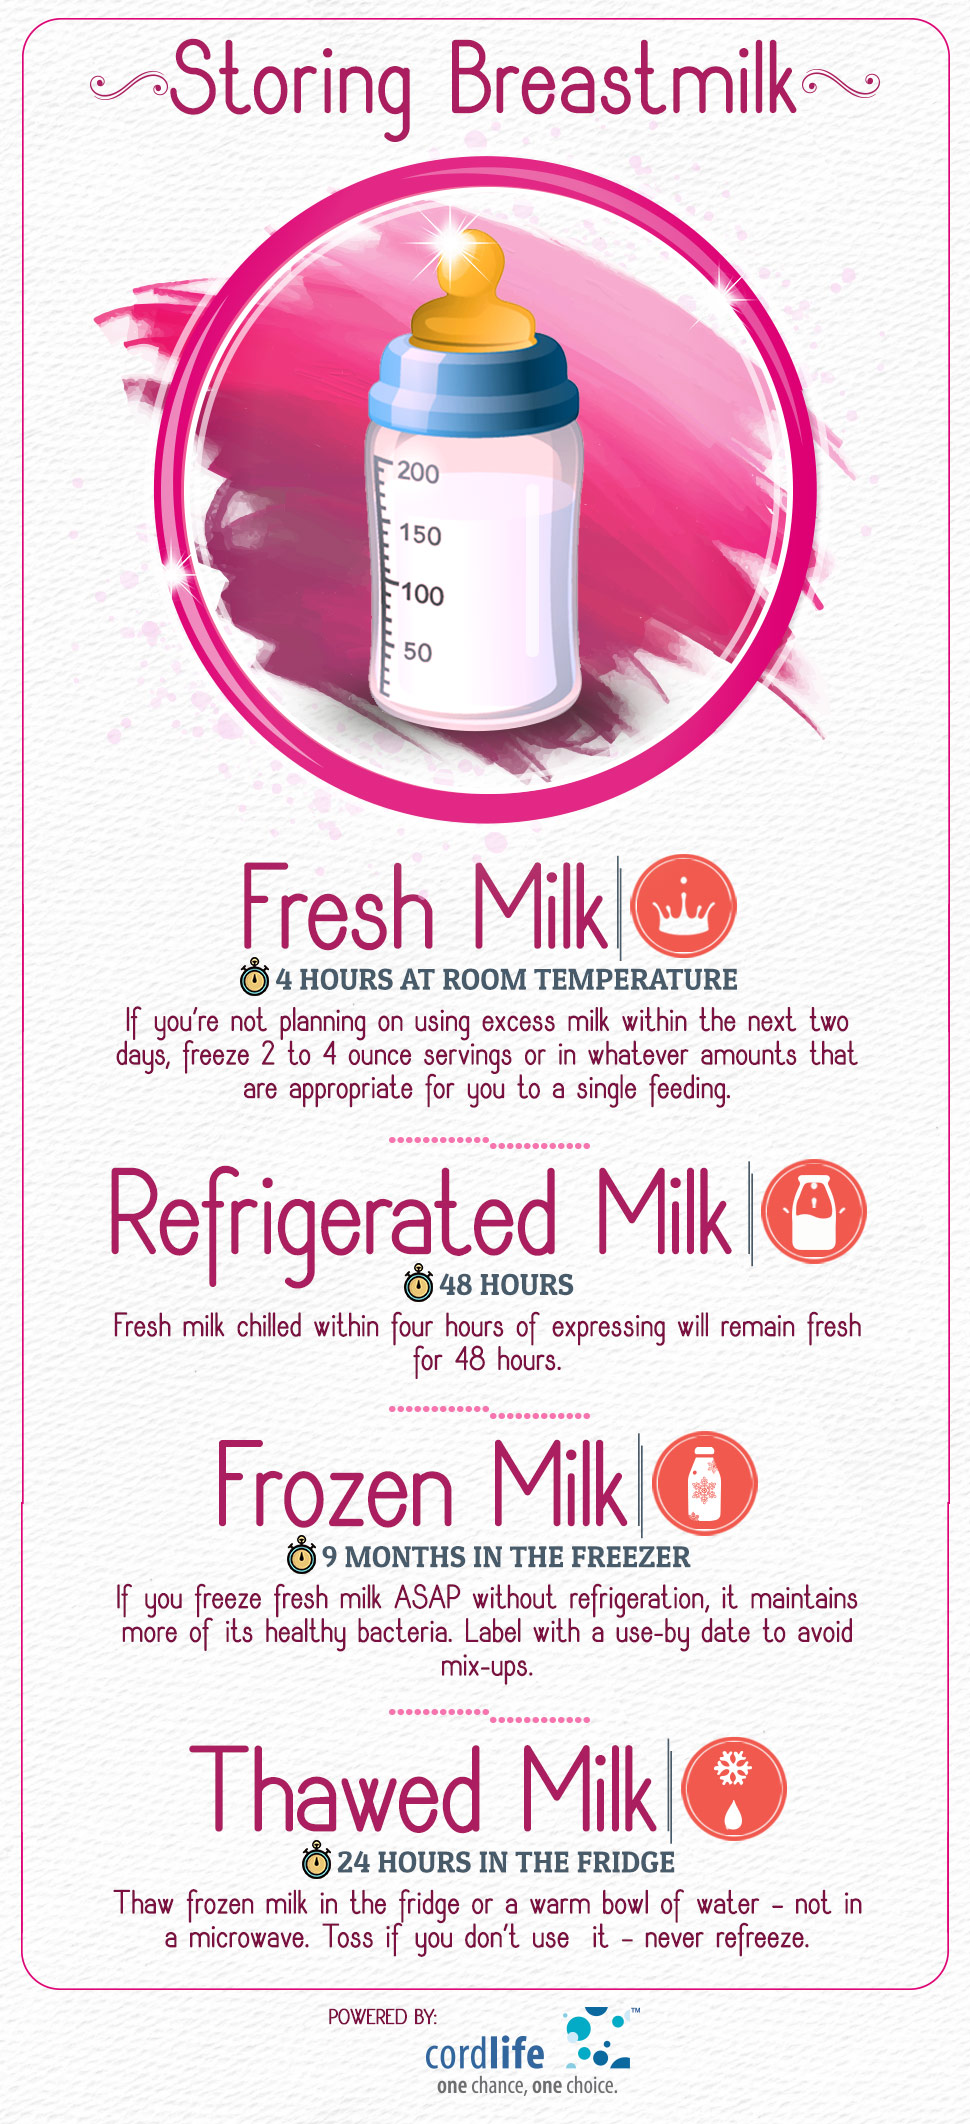 Storing Breastmilk